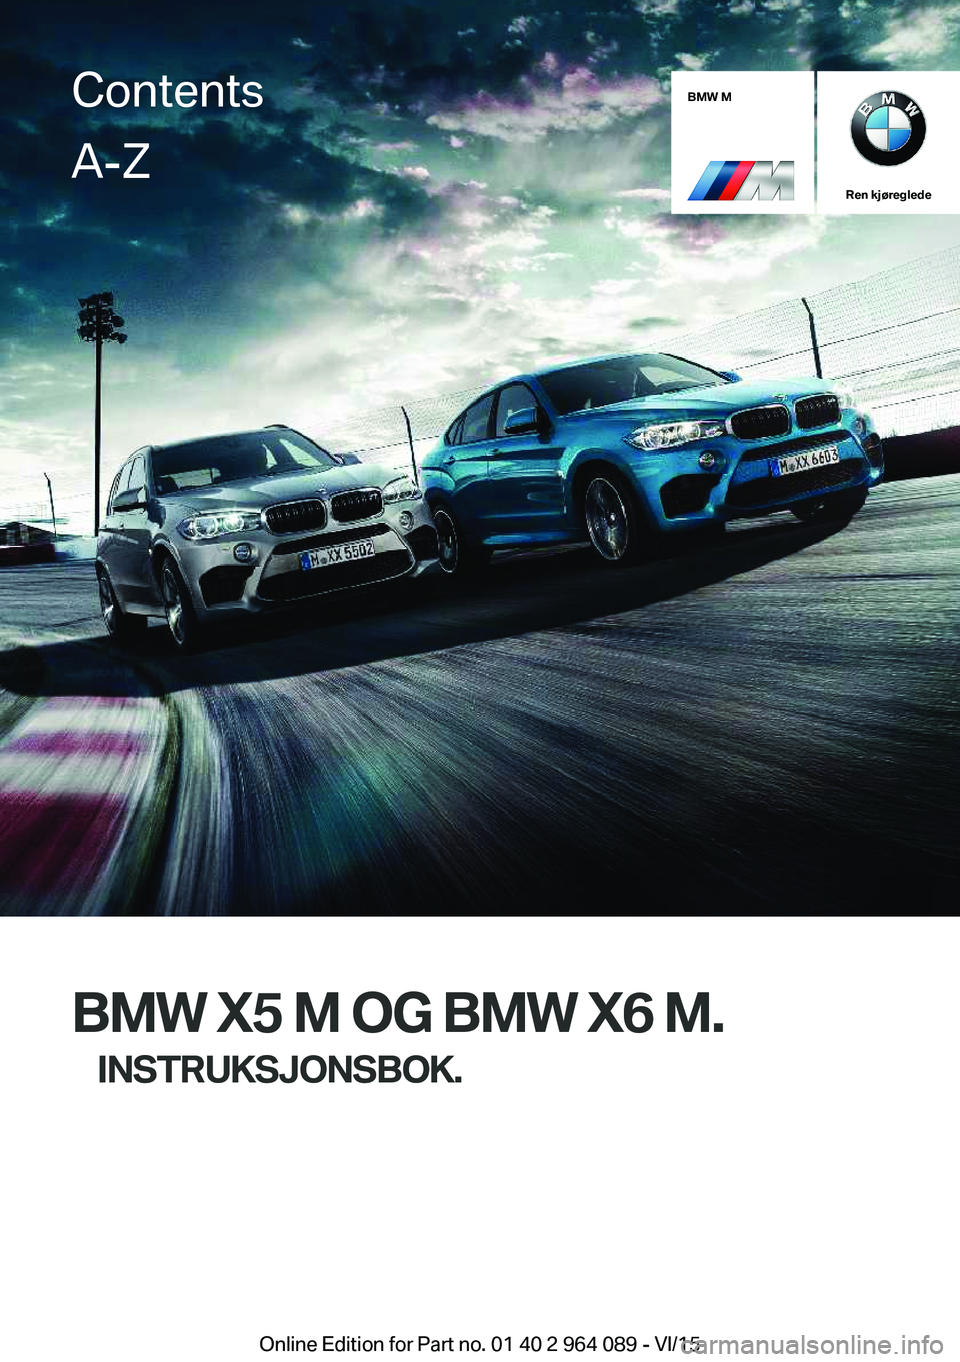 BMW X6 M 2016  InstruksjonsbØker (in Norwegian) BMW M
Ren kjøreglede
BMW X5 M OG BMW X6 M.INSTRUKSJONSBOK.
ContentsA-Z
Online Edition for Part no. 01 40 2 964 089 - VI/15   